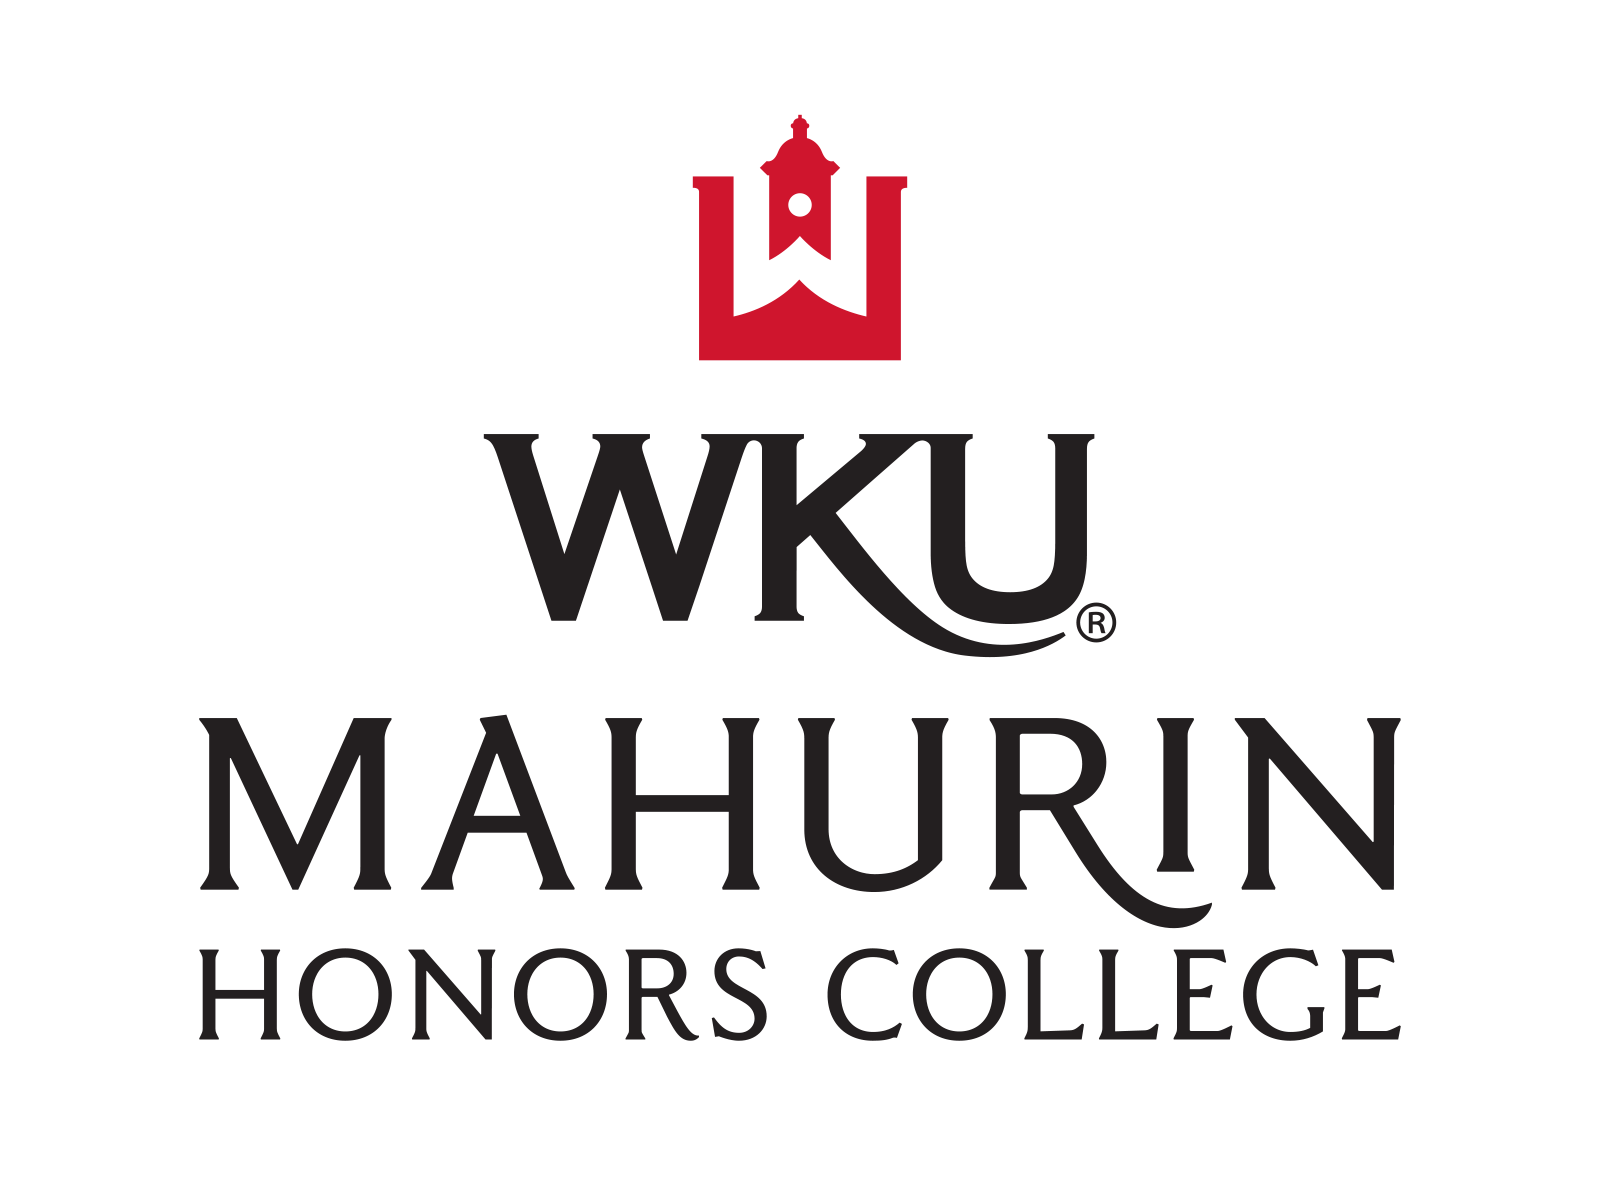 Mahurin Honors College